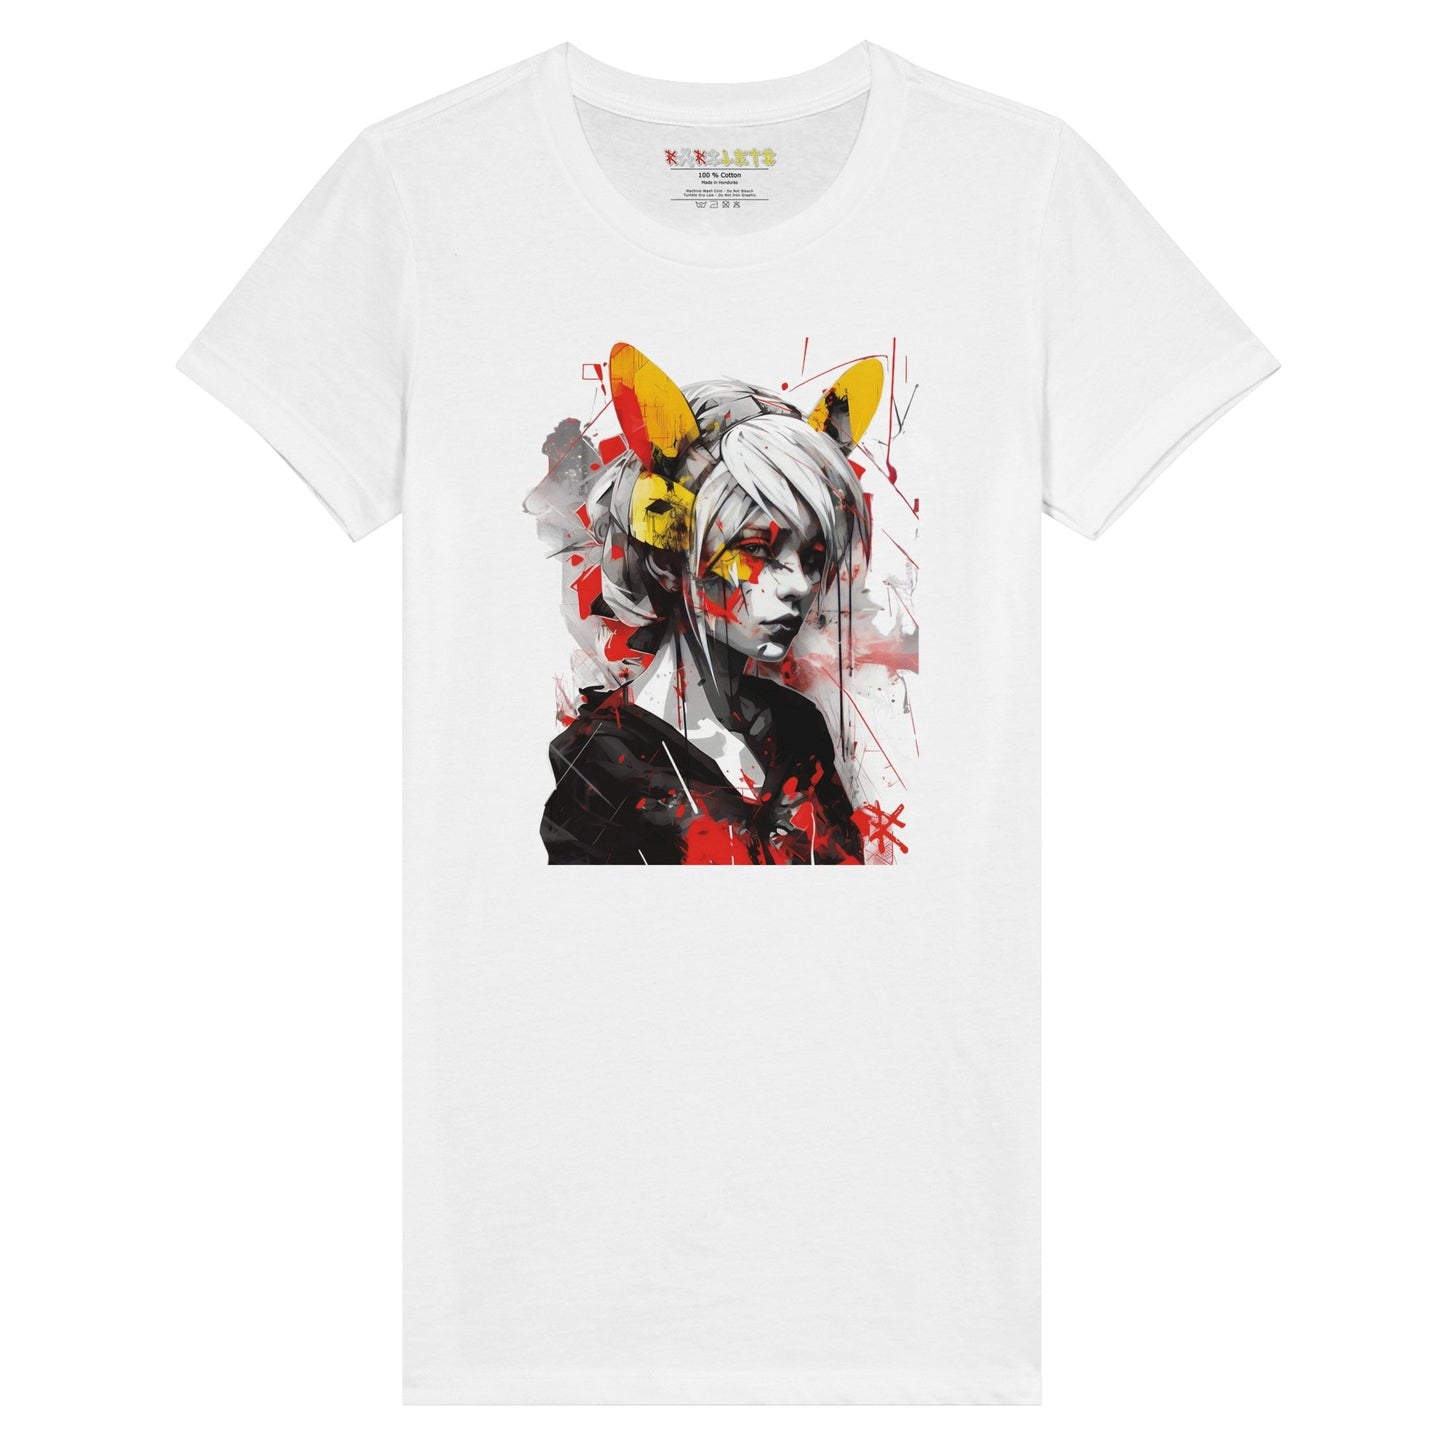 GIRL WITH CAT EARS Premium Tee - Rarileto t shirts - White - S